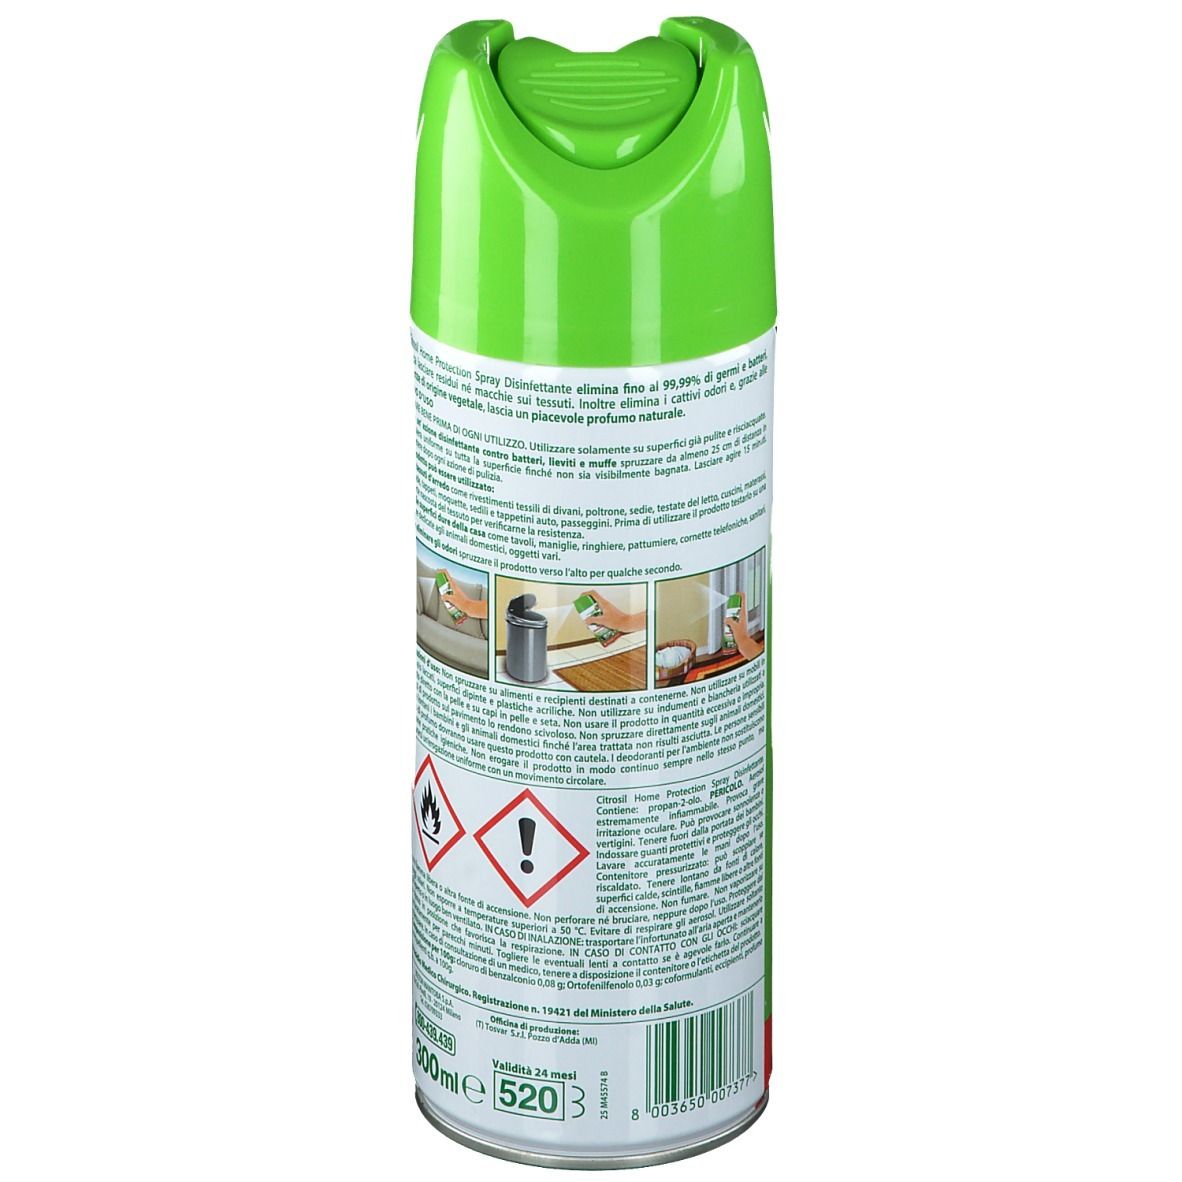 Citrosil Home Protection Spray Disinfettante Agrumi